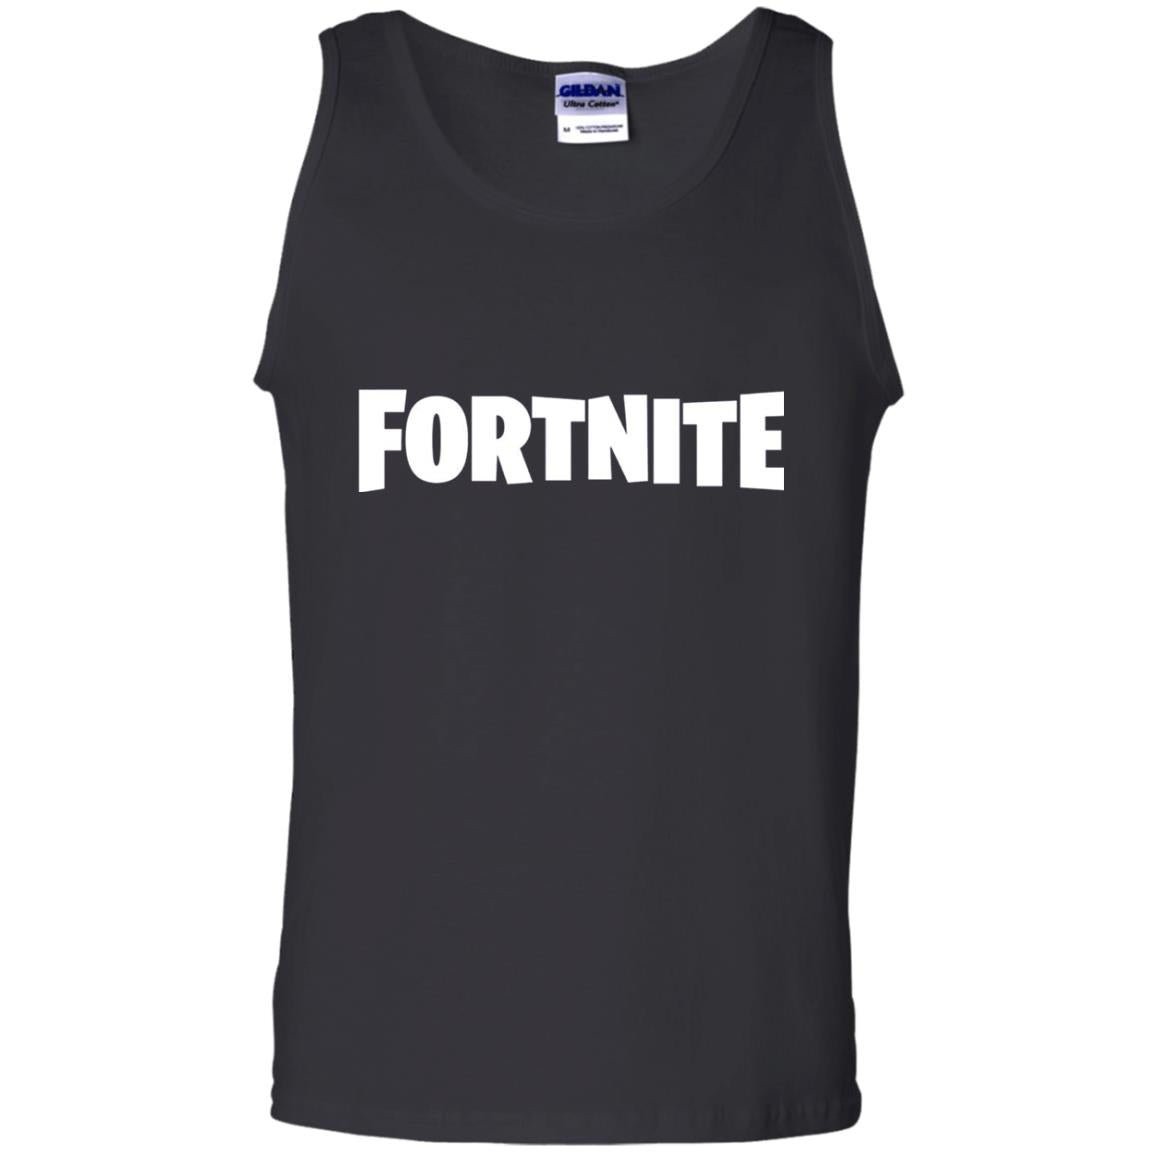 Fortnite Logo T-shirt